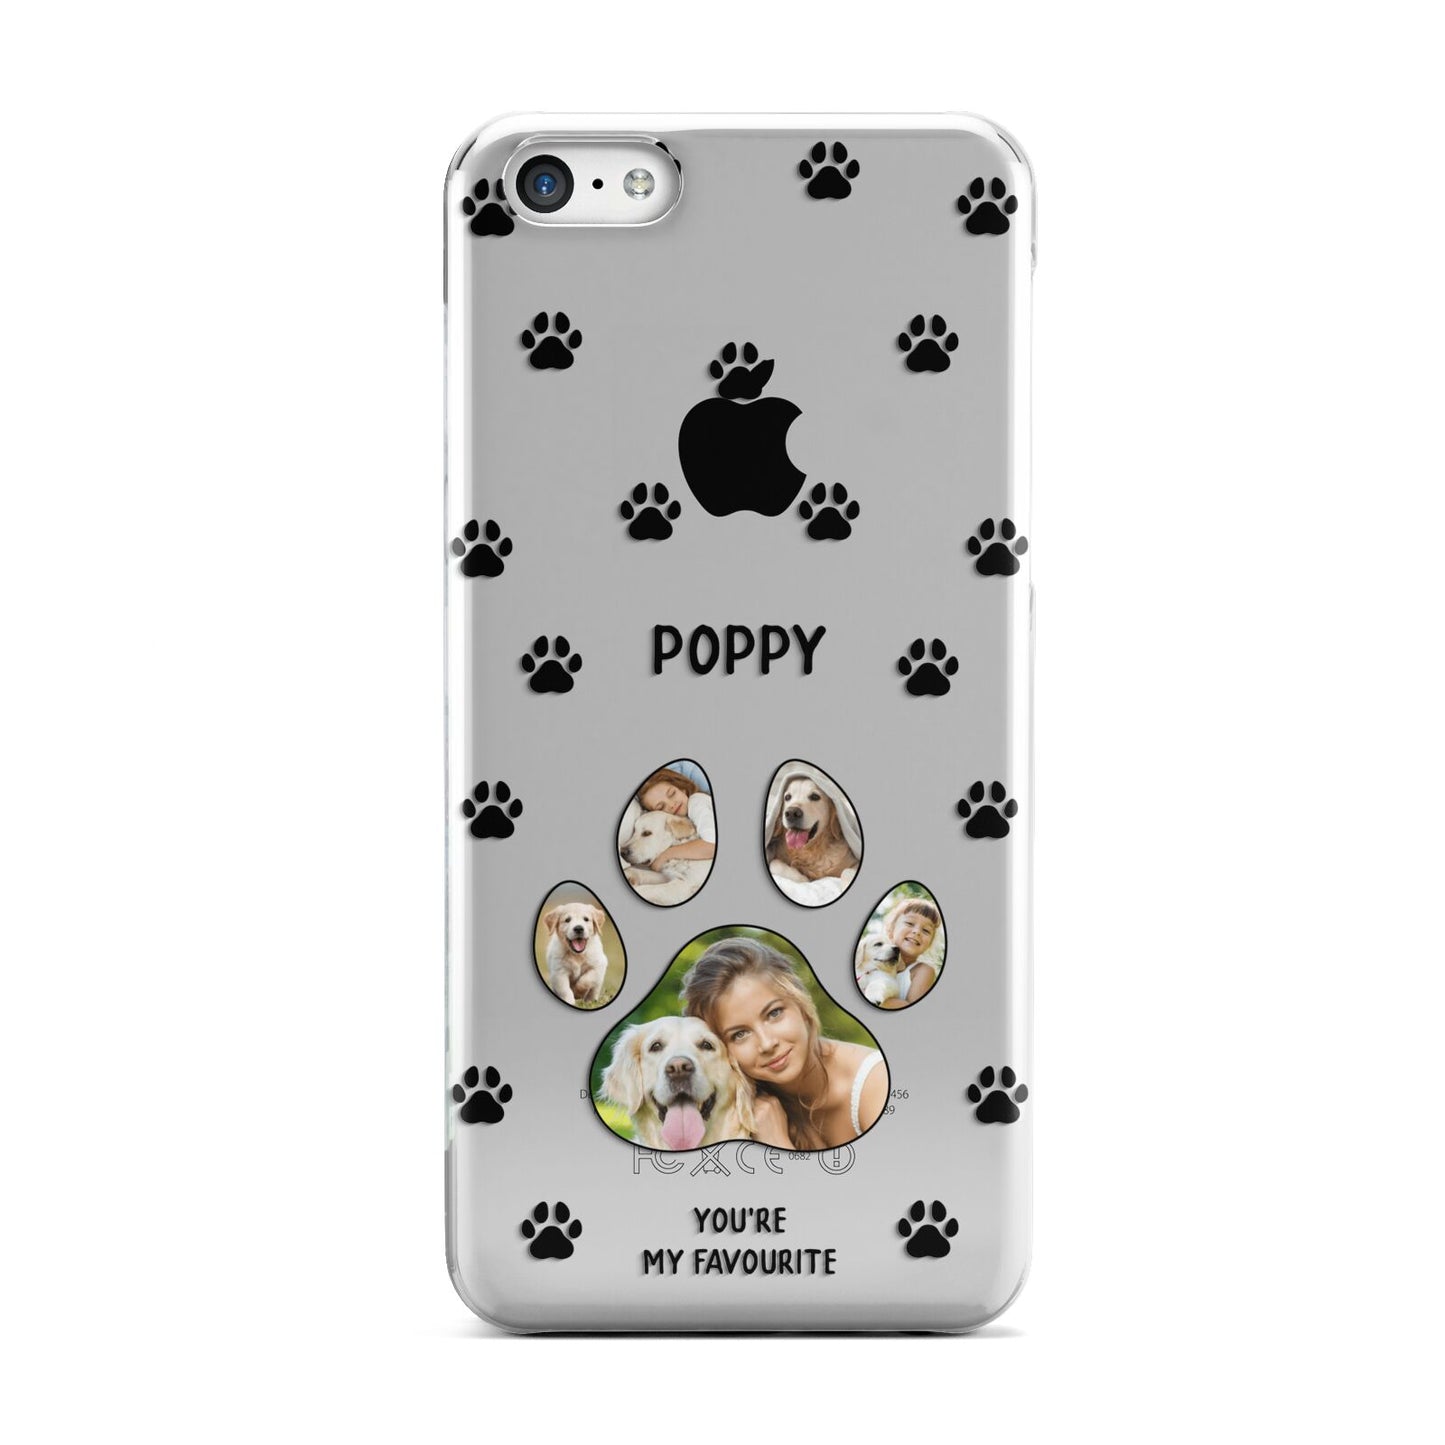 Favourite Dog Photos Personalised Apple iPhone 5c Case